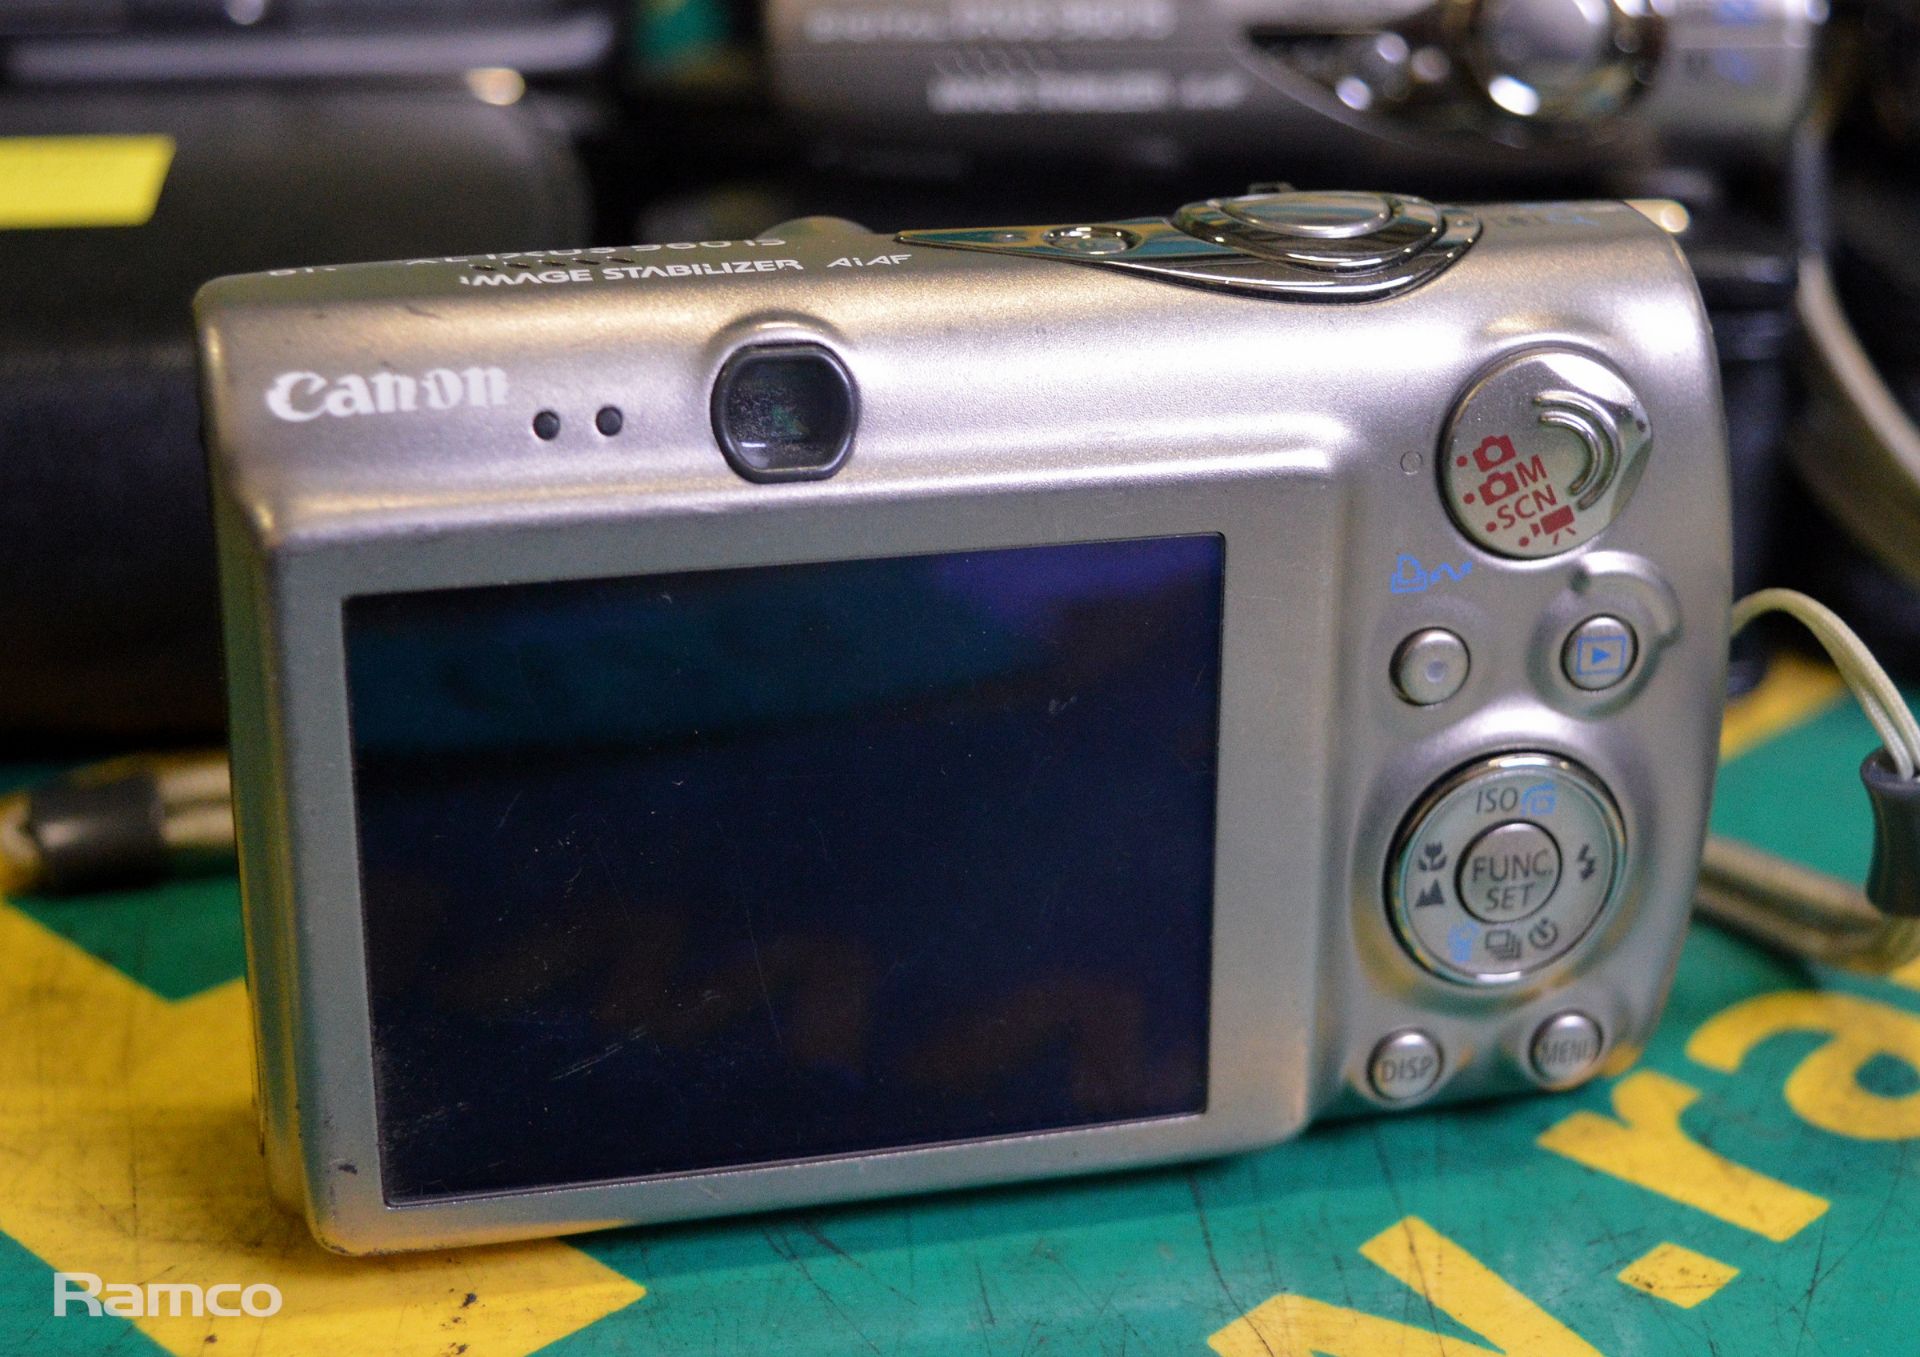 9x Canon IXUS 960IS Digital Cameras in Cases - Image 3 of 6